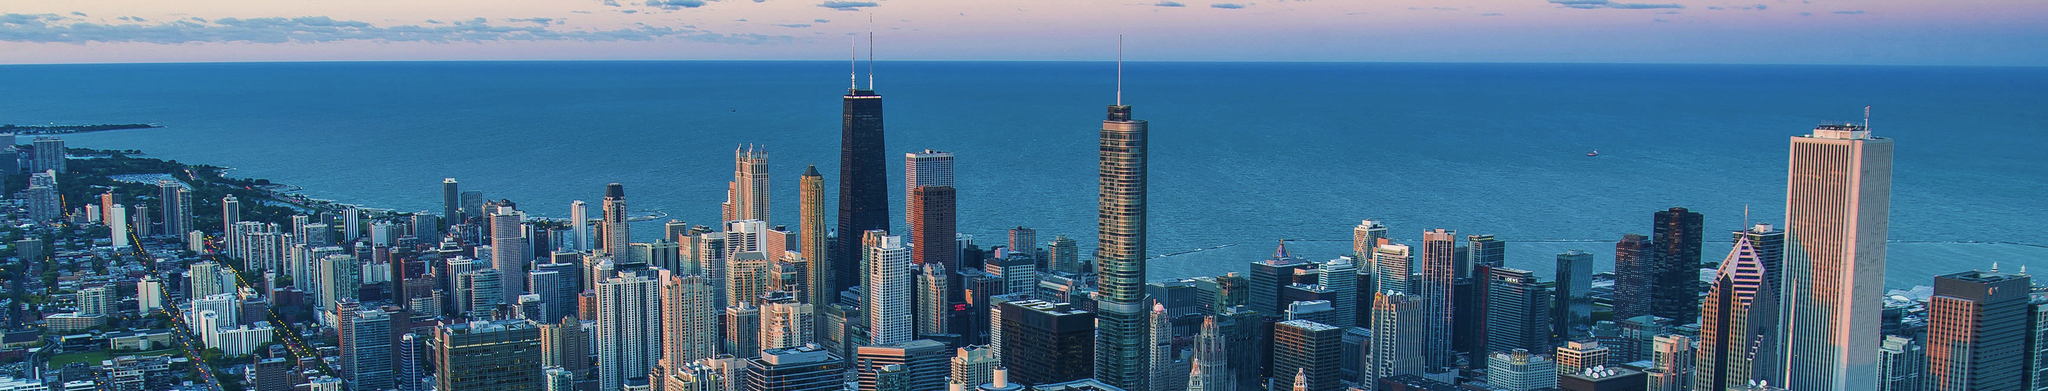 chicago-sky-veiw cropped